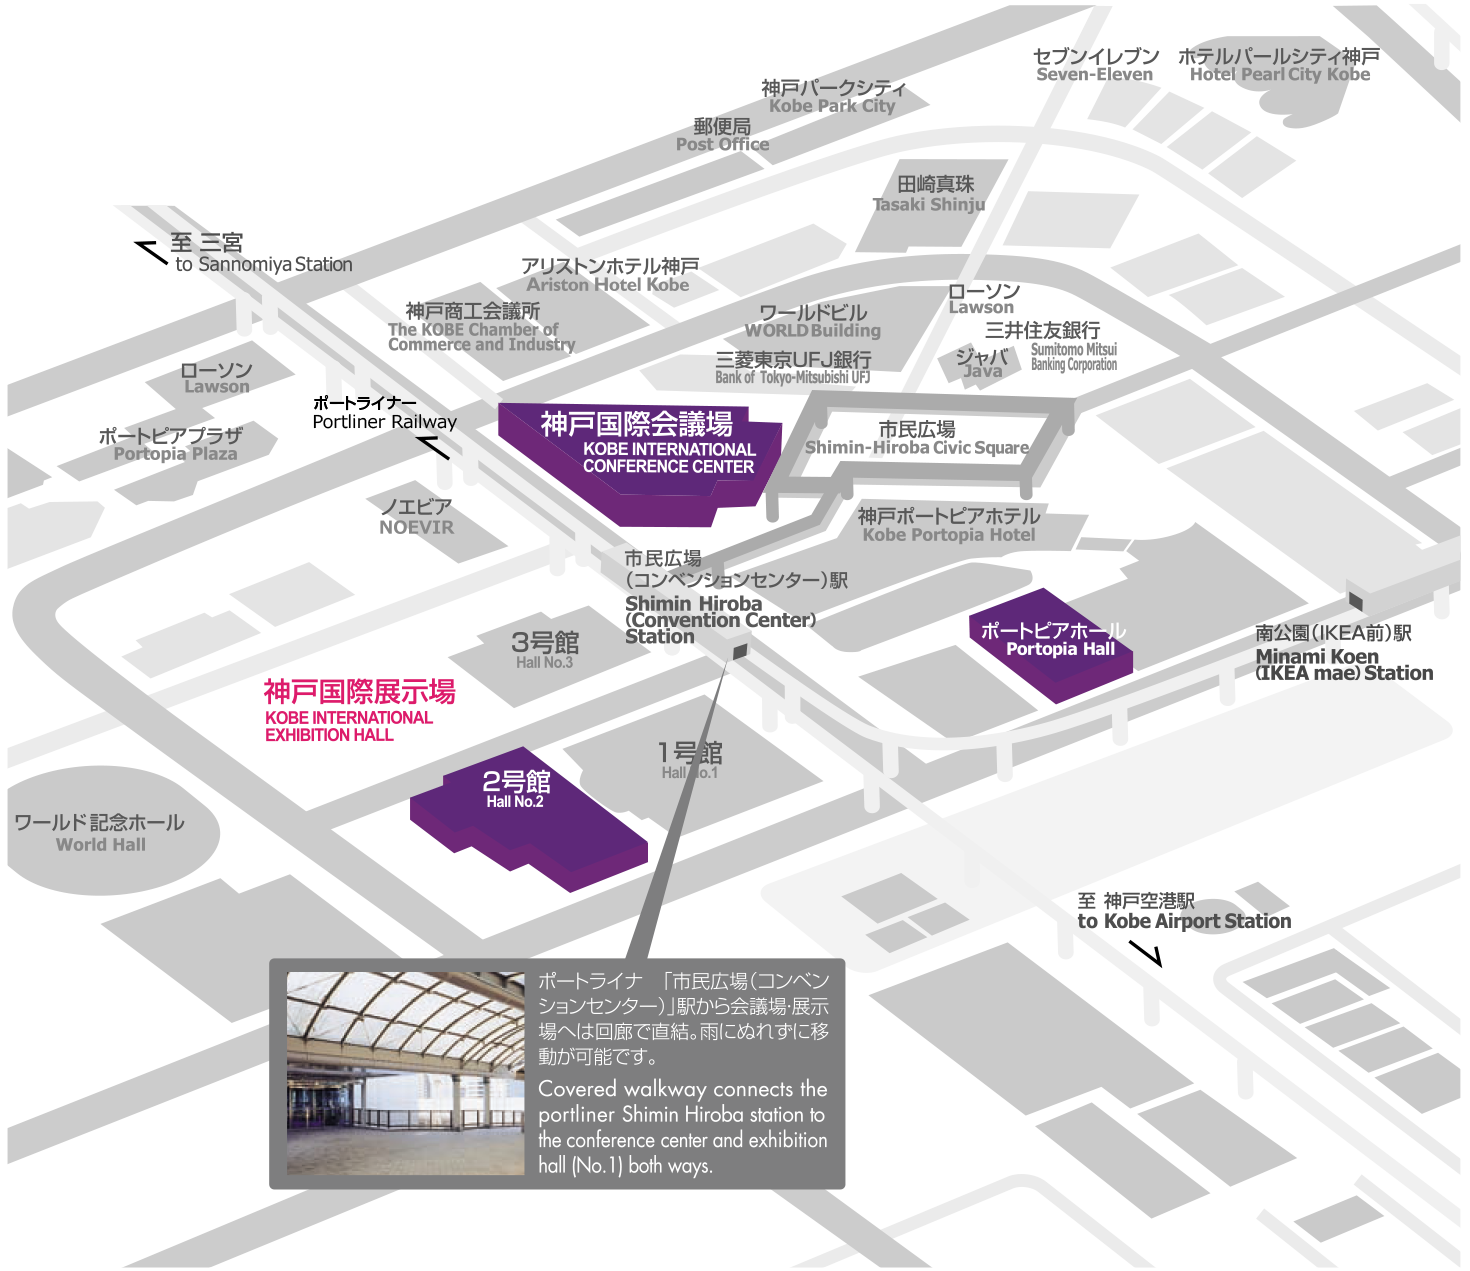 Exhibition Guide Floorplan